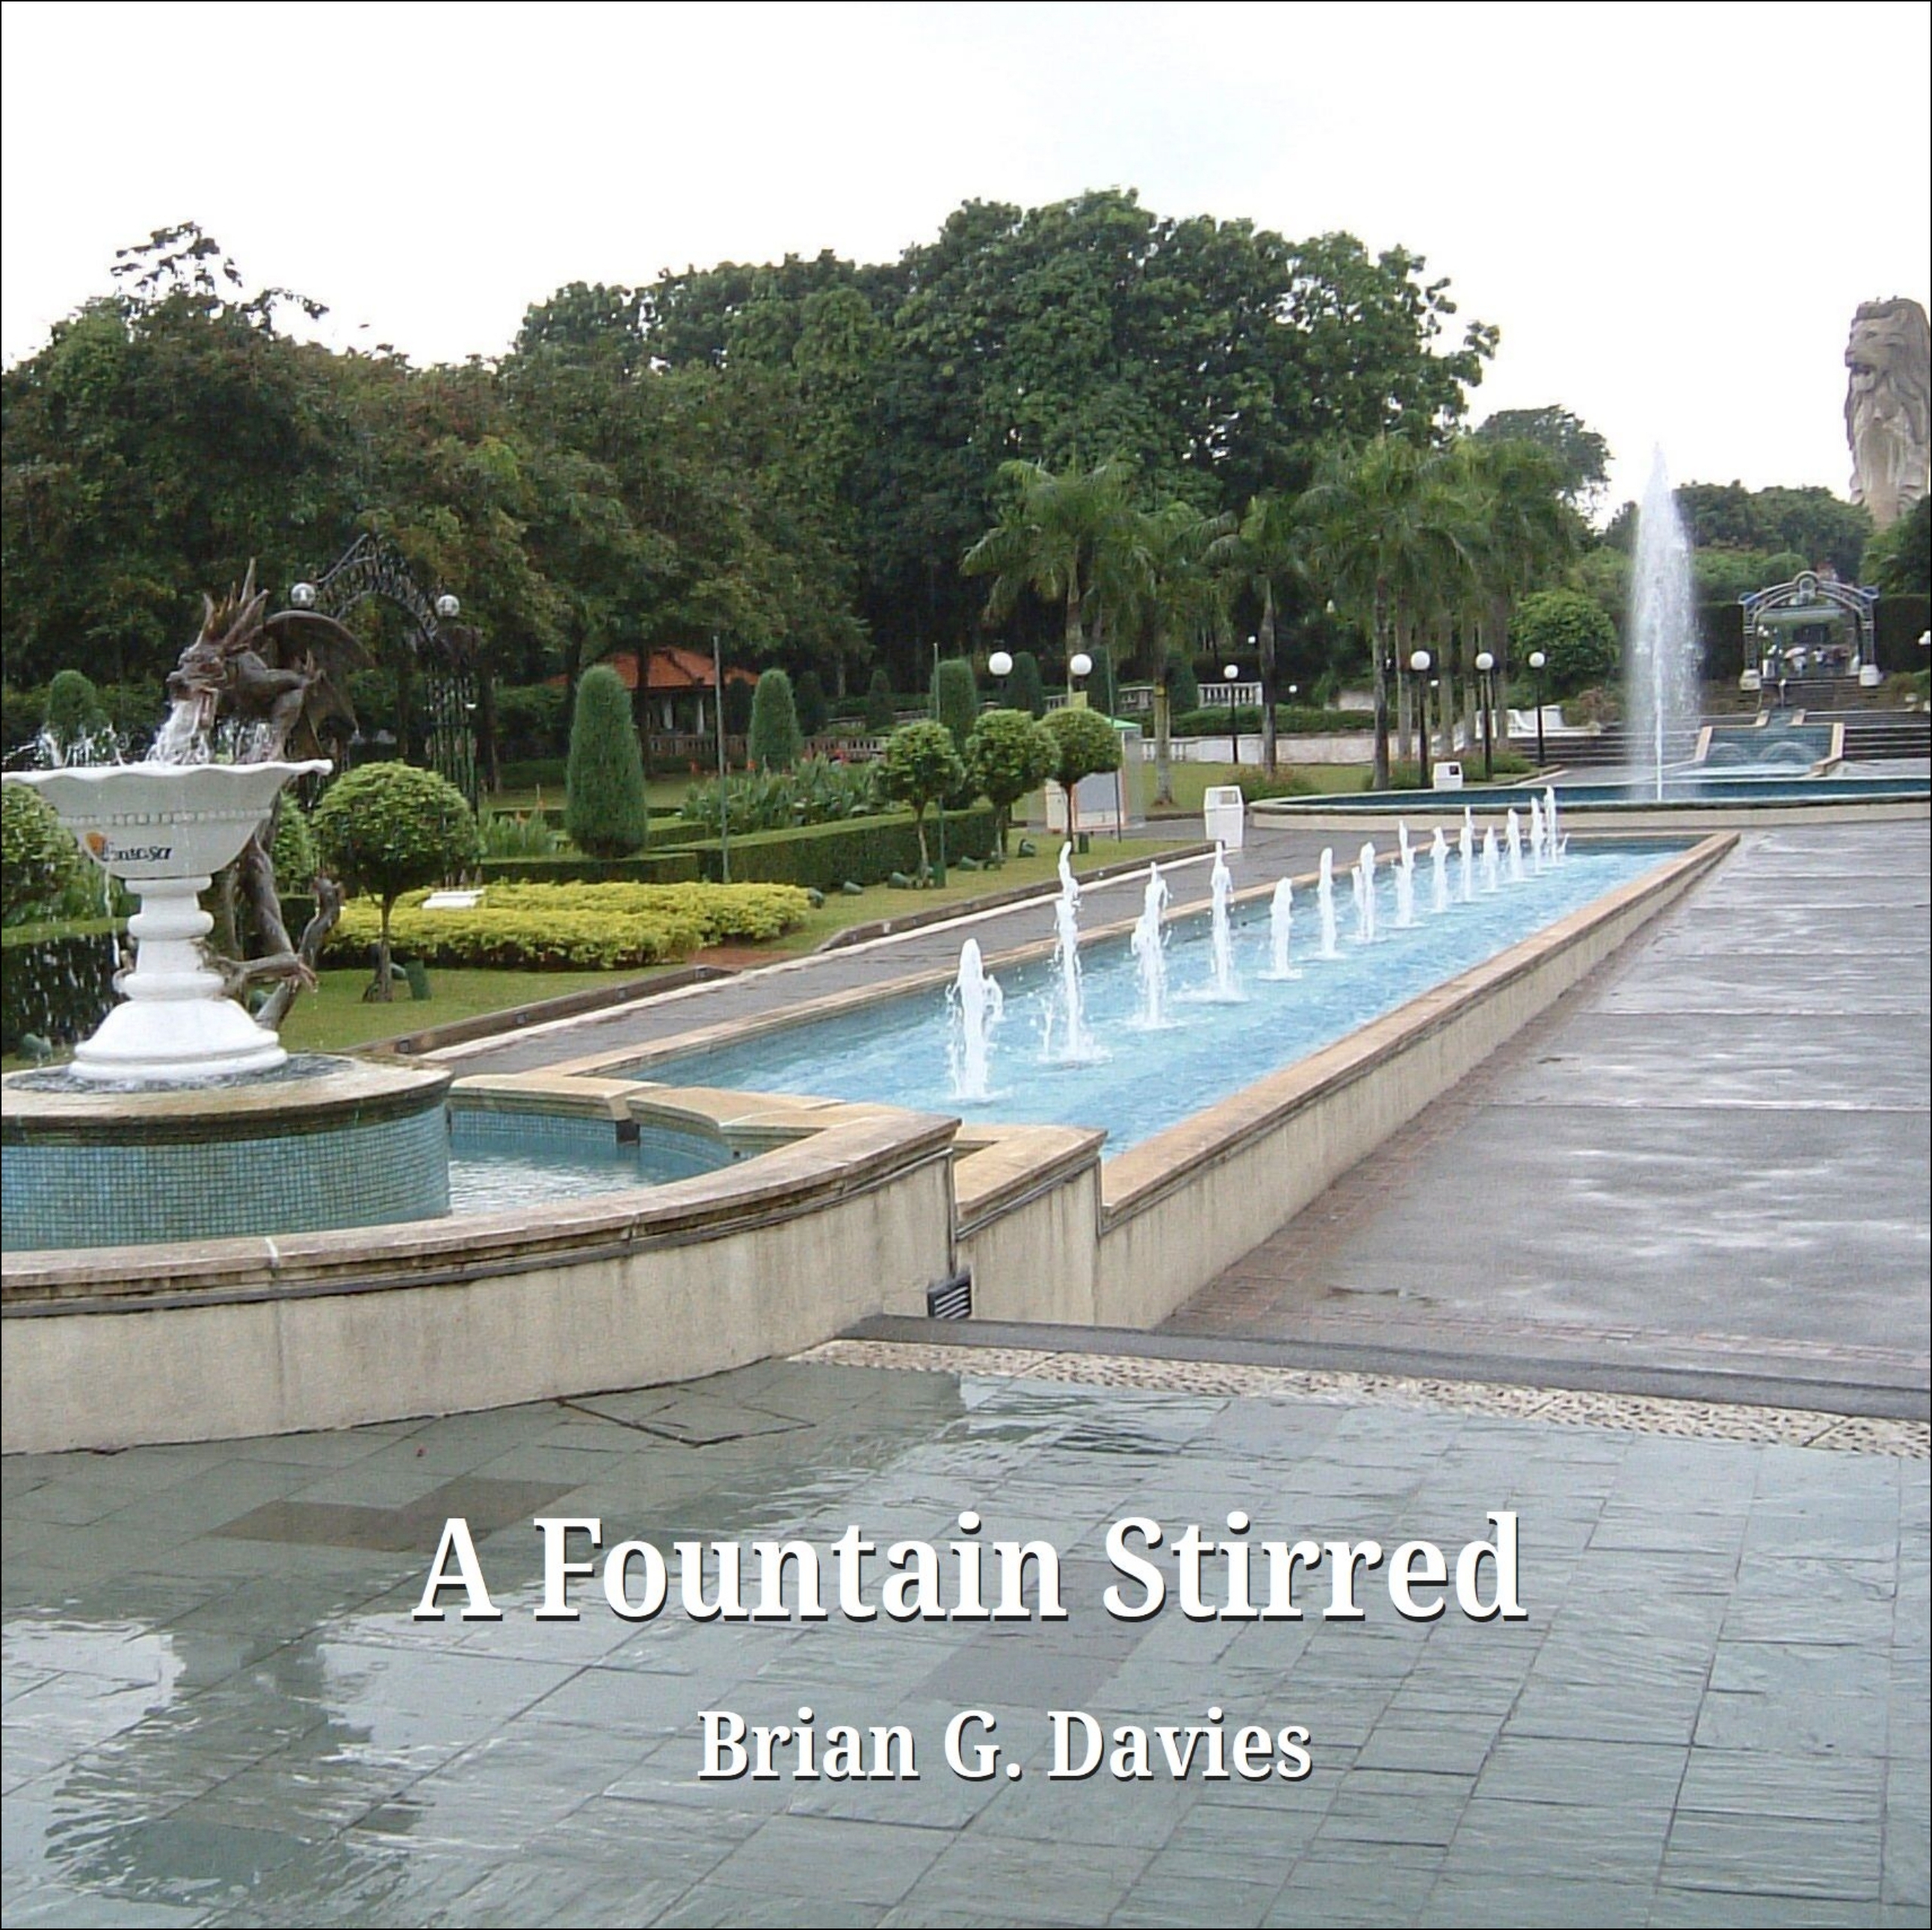 A Fountain Stirred by Brian G. Davies